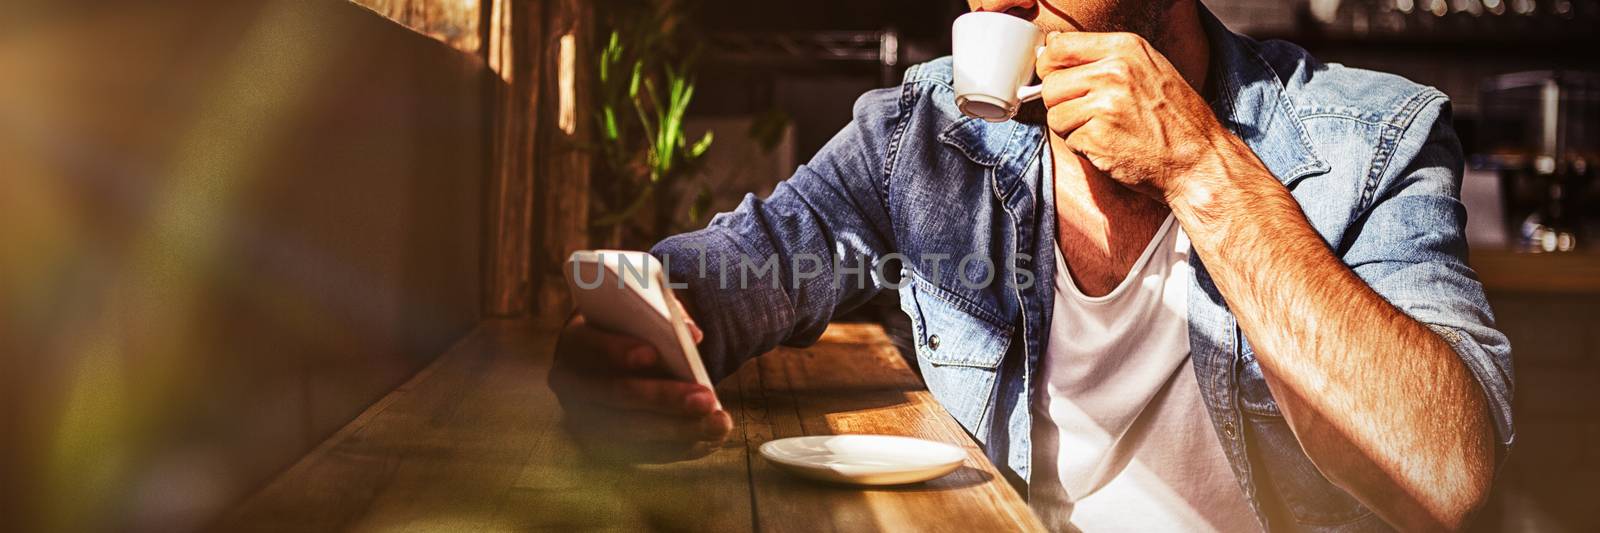 Man drinking a cup of coffee by Wavebreakmedia